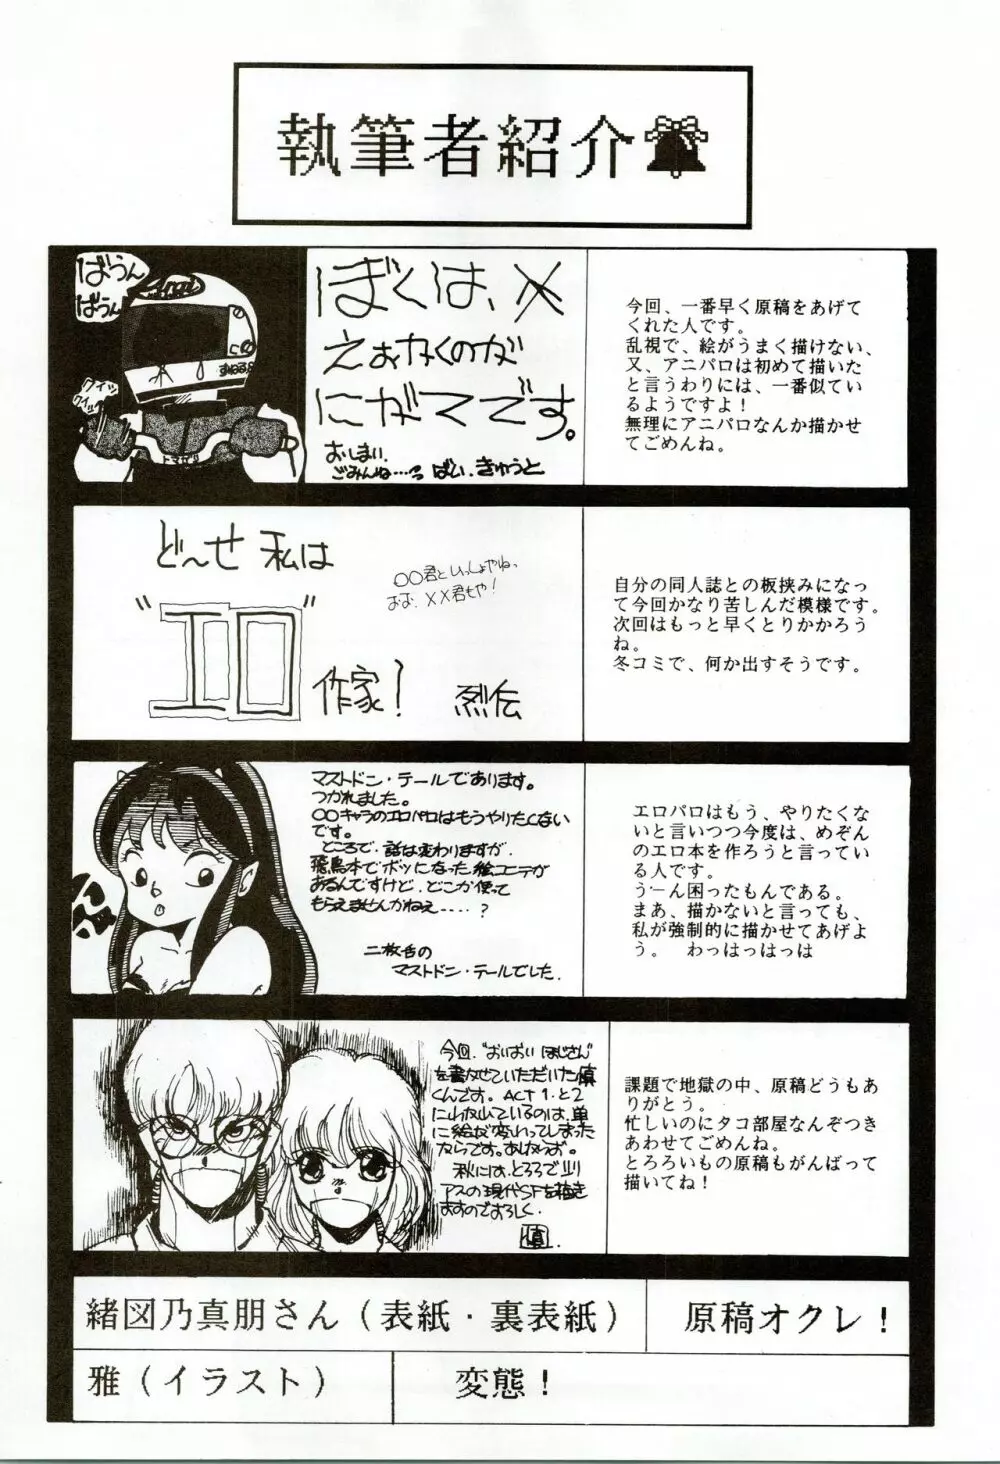 甲冑伝説 - page77